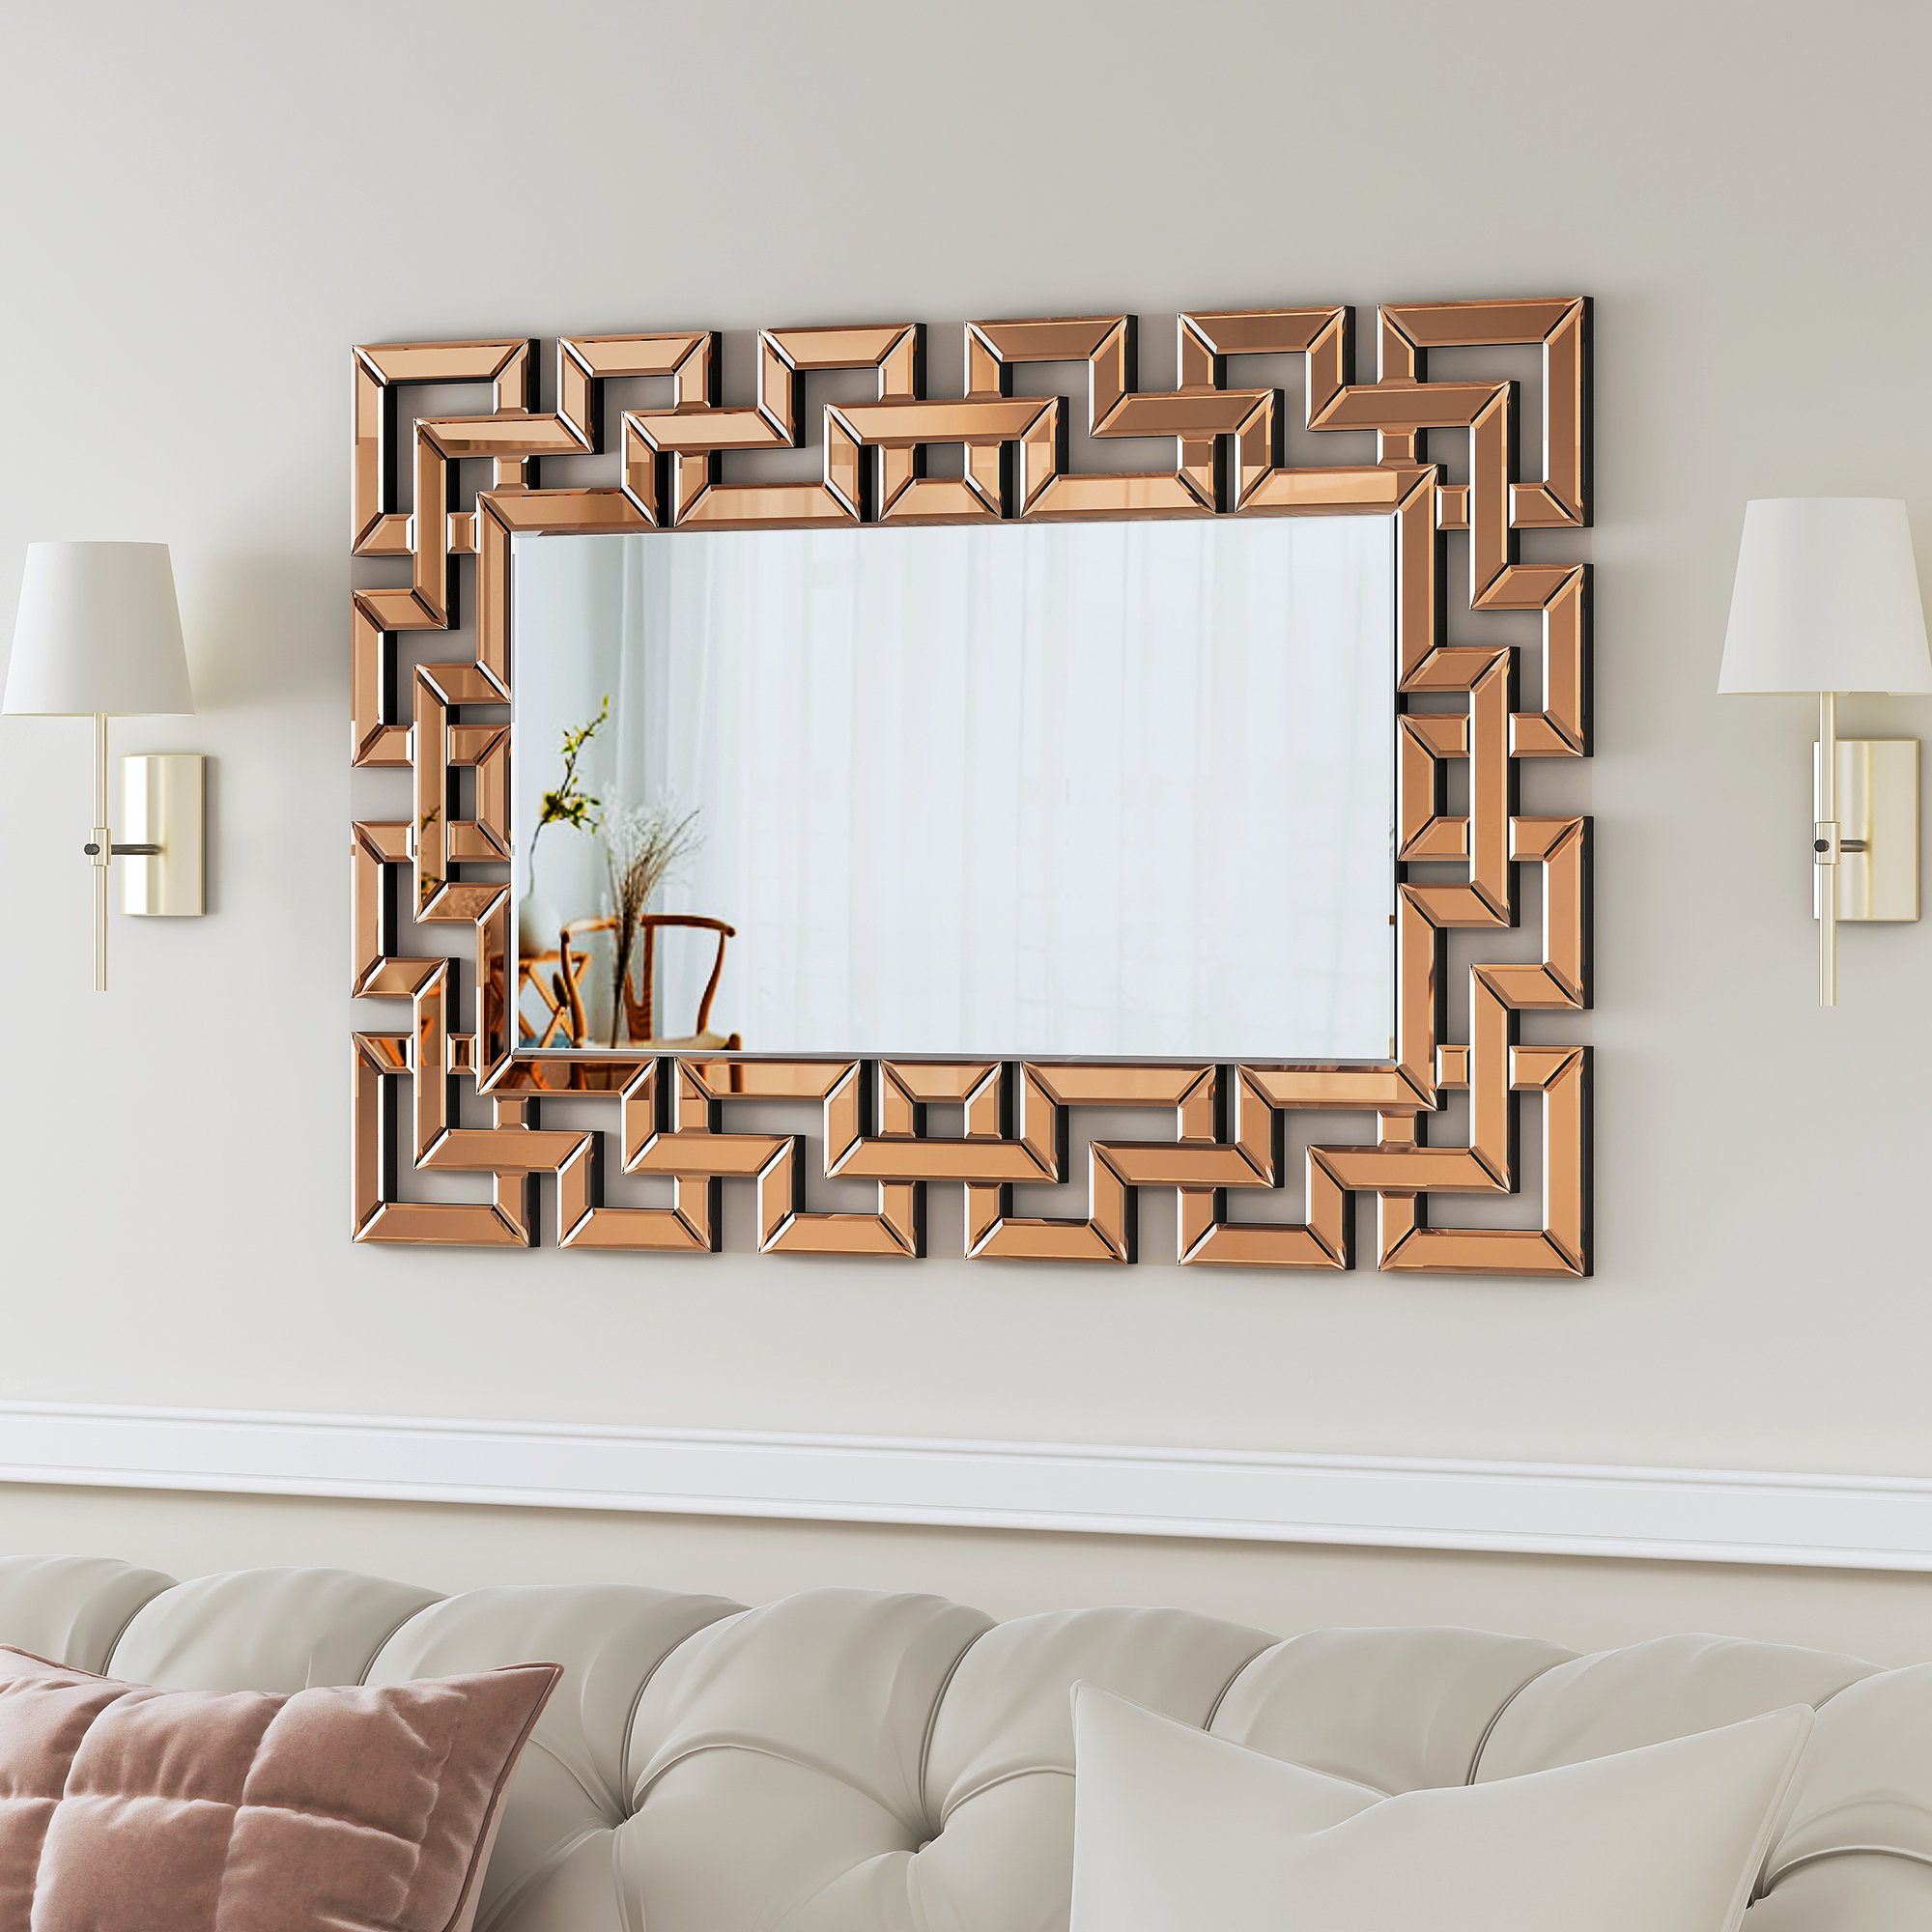 Everly Quinn Faustine Rectangle Asymmetrical Wall Mirror & Reviews ...